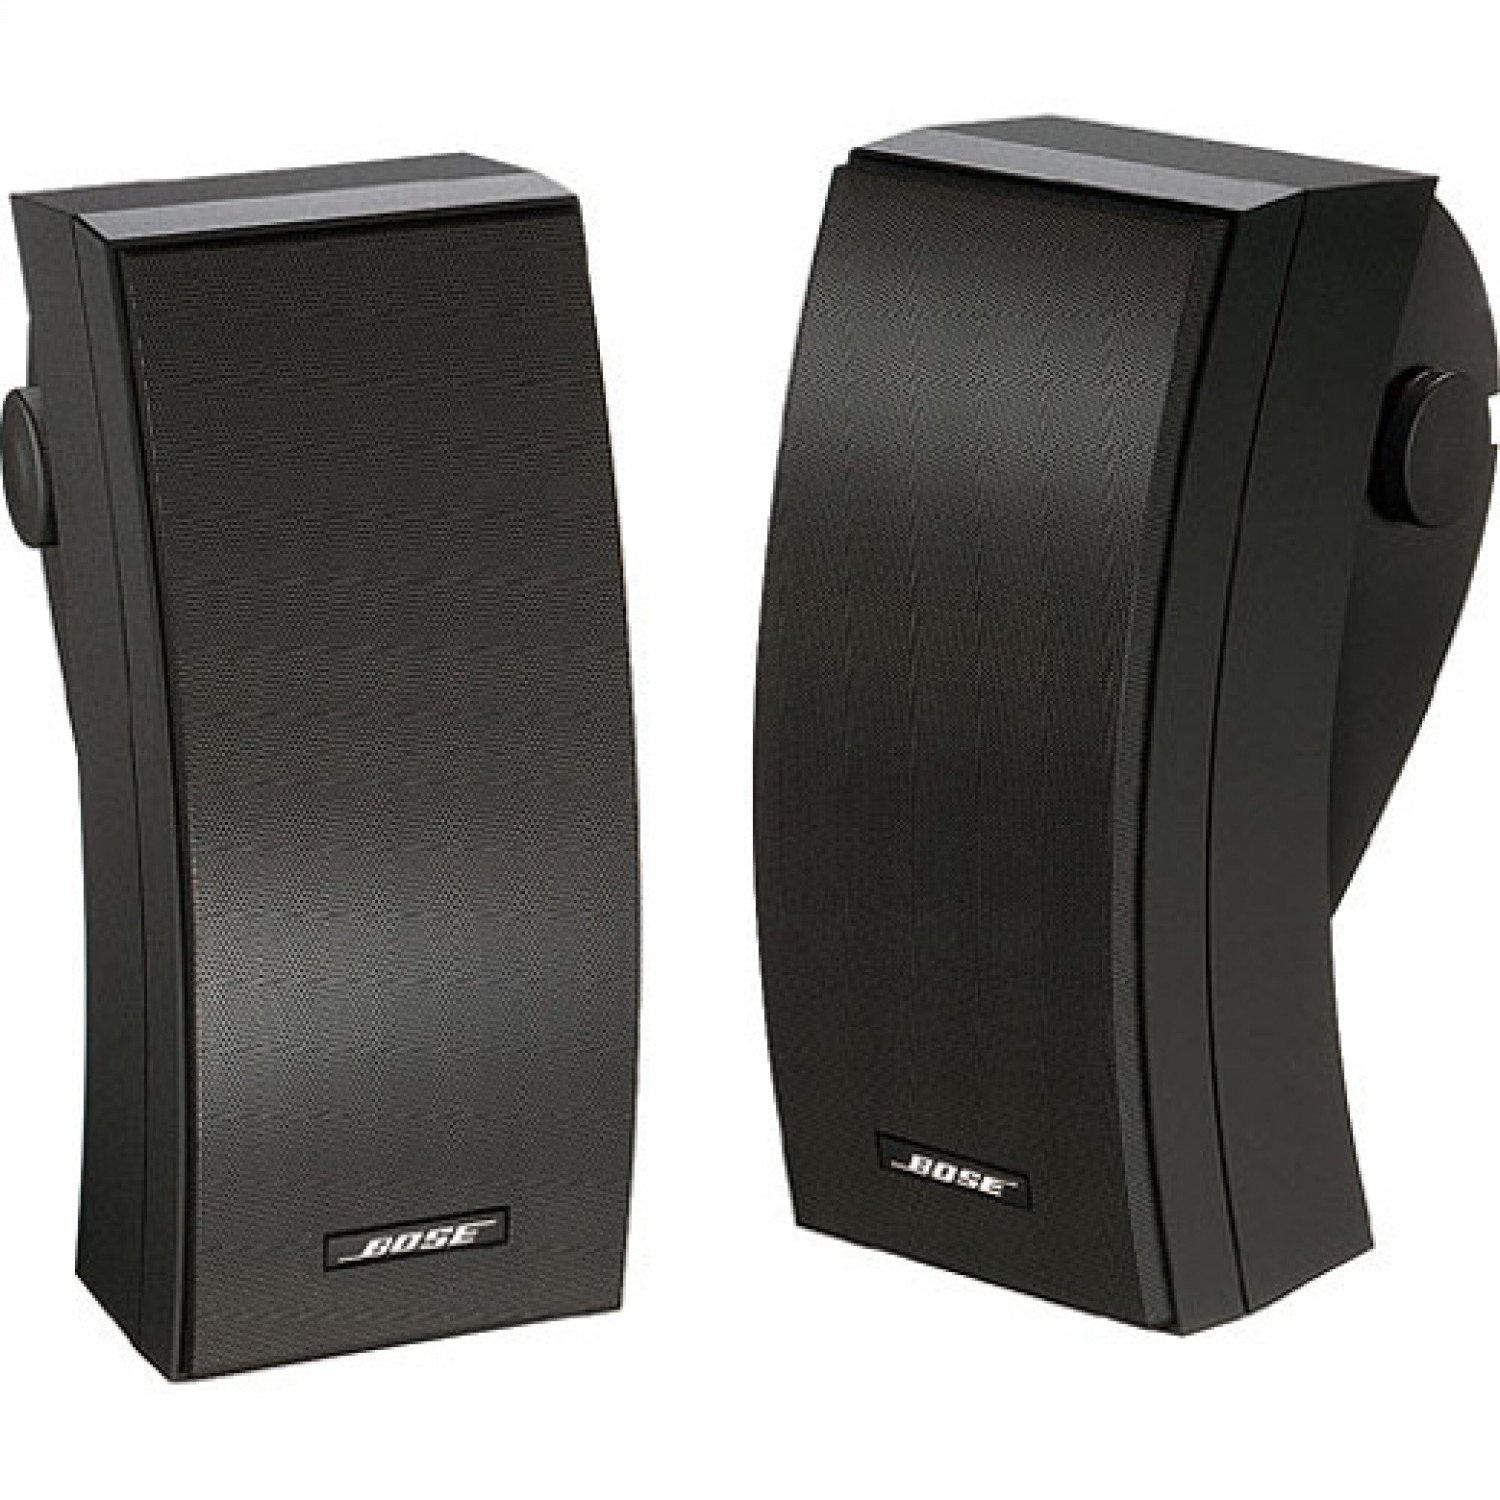 amplifier for bose 251 speakers